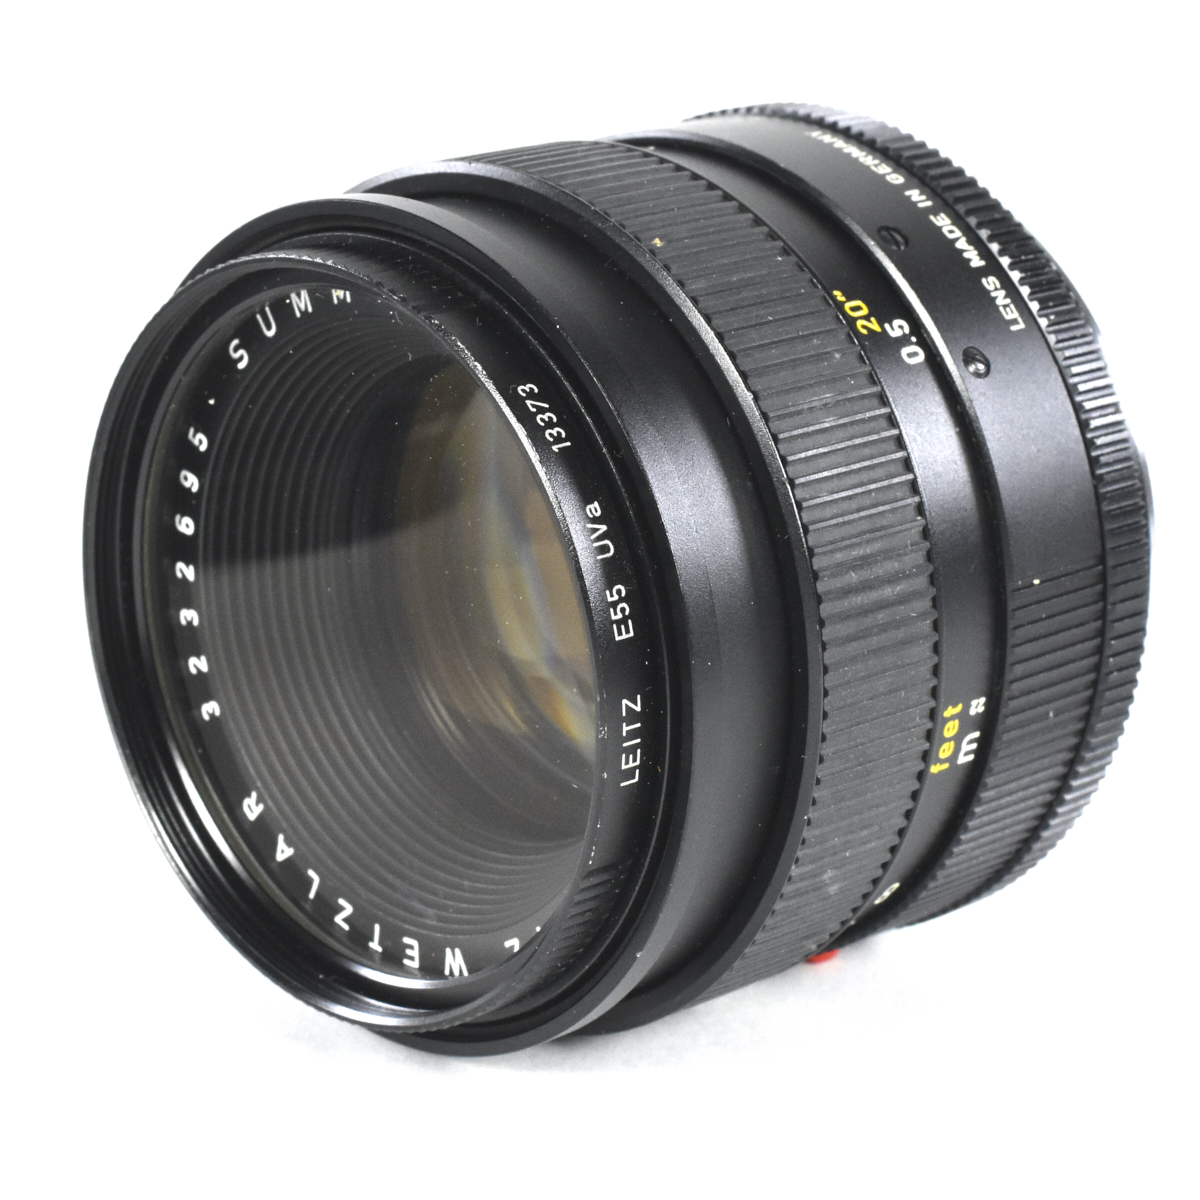 Leitz SummiLux-R 1:1.4/50 Camera Lens with B+W Polarizing Filter - Image 7 of 9